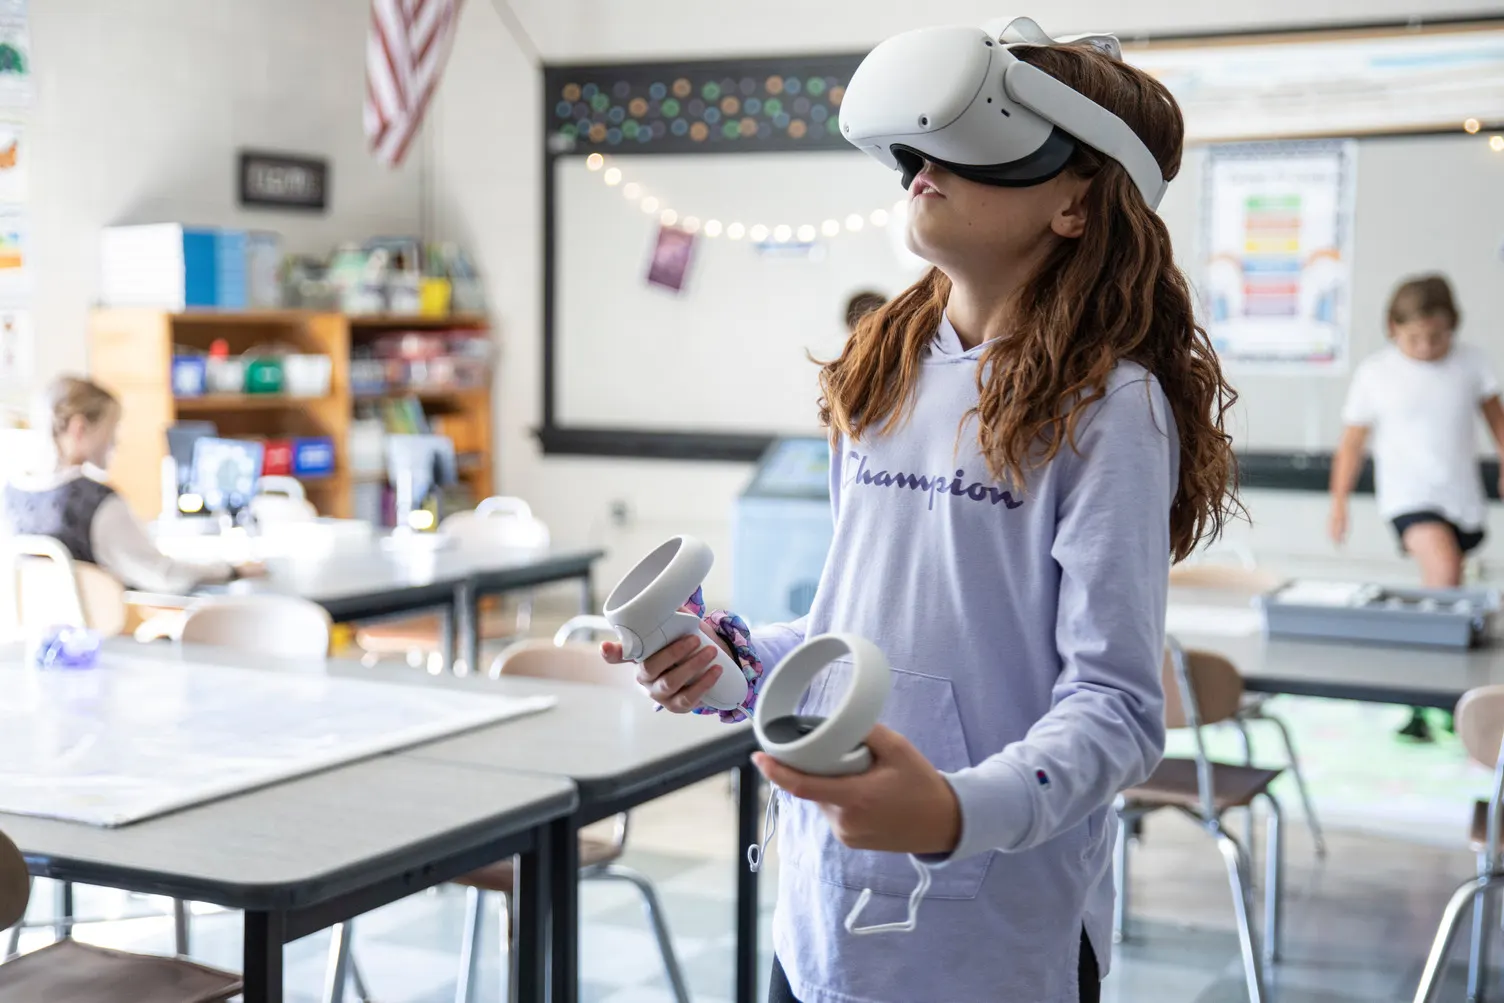 A female student uses a virtual reality headset